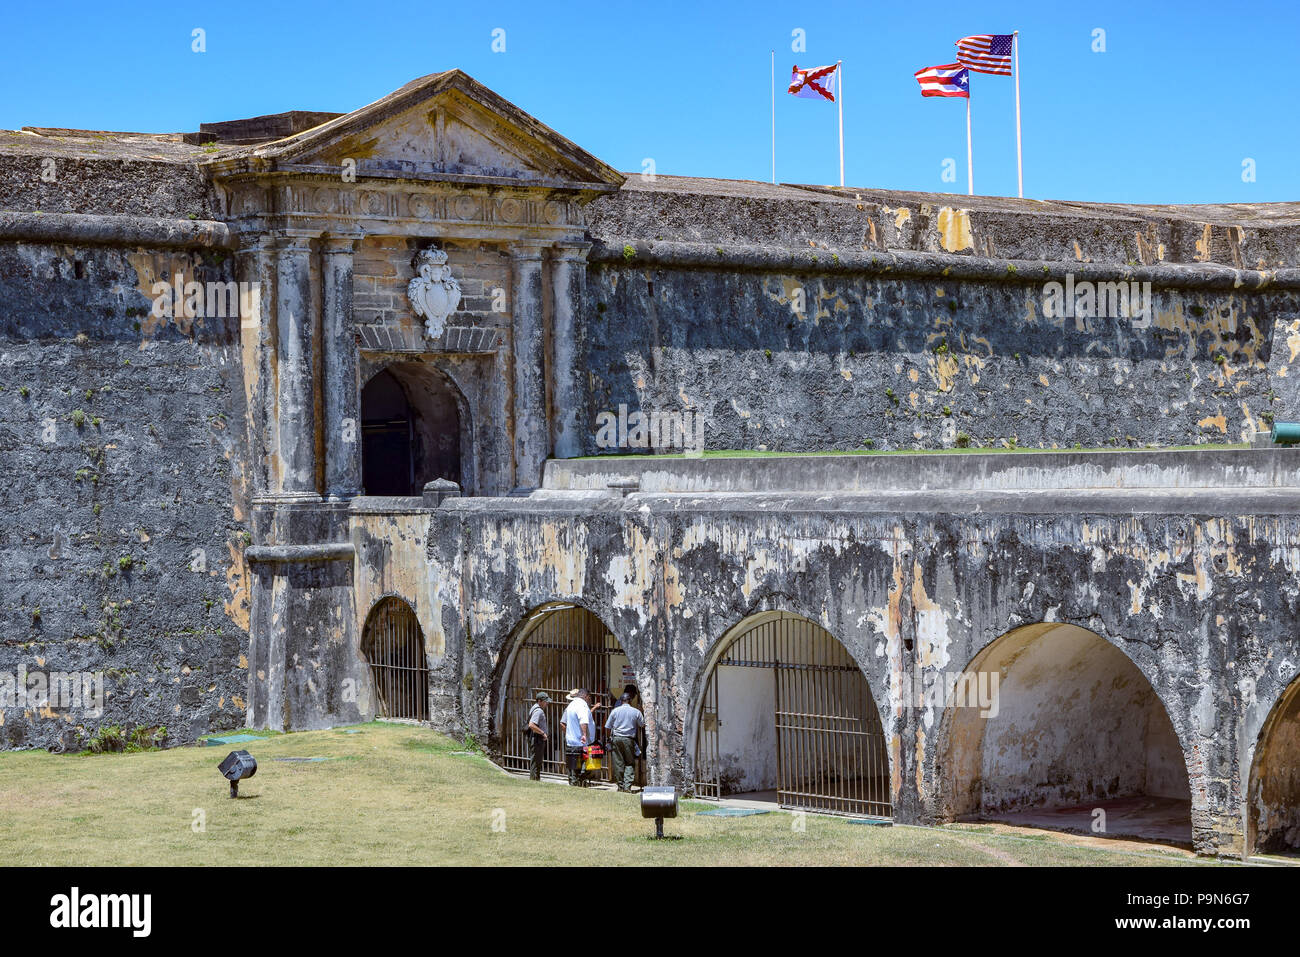 San Juan, Puerto Rico - April 02 2014: View from the front of Castillo San Felipe del Morro in Old San Juan. Stock Photo